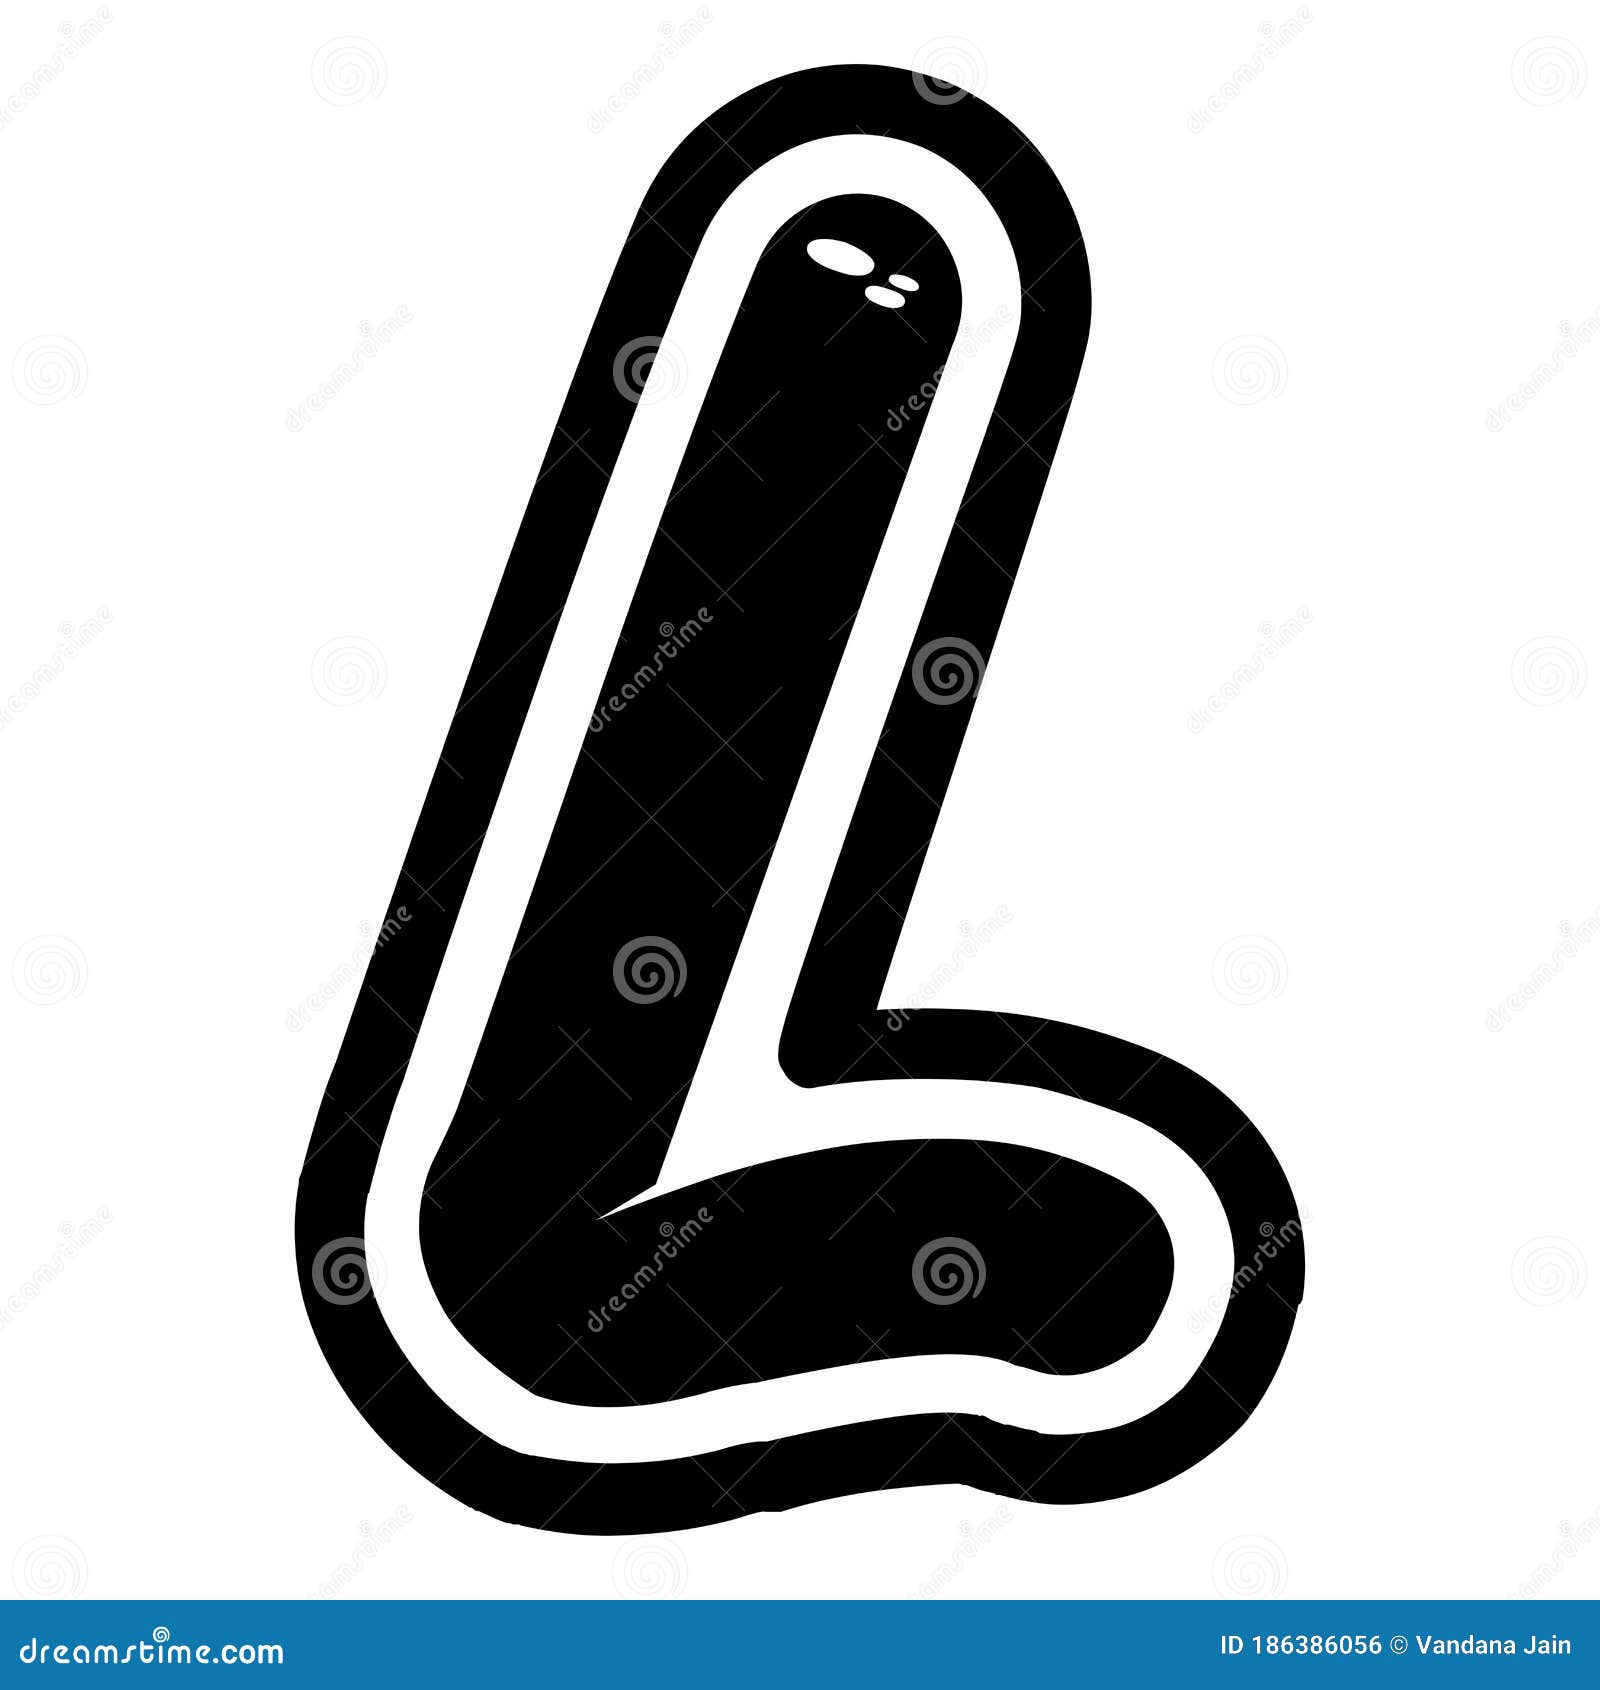 Alphabet Symbol - Stylish Letter  Font Symbol of   on White Background. Stock Illustration - Illustration of hand, letter:  186386056